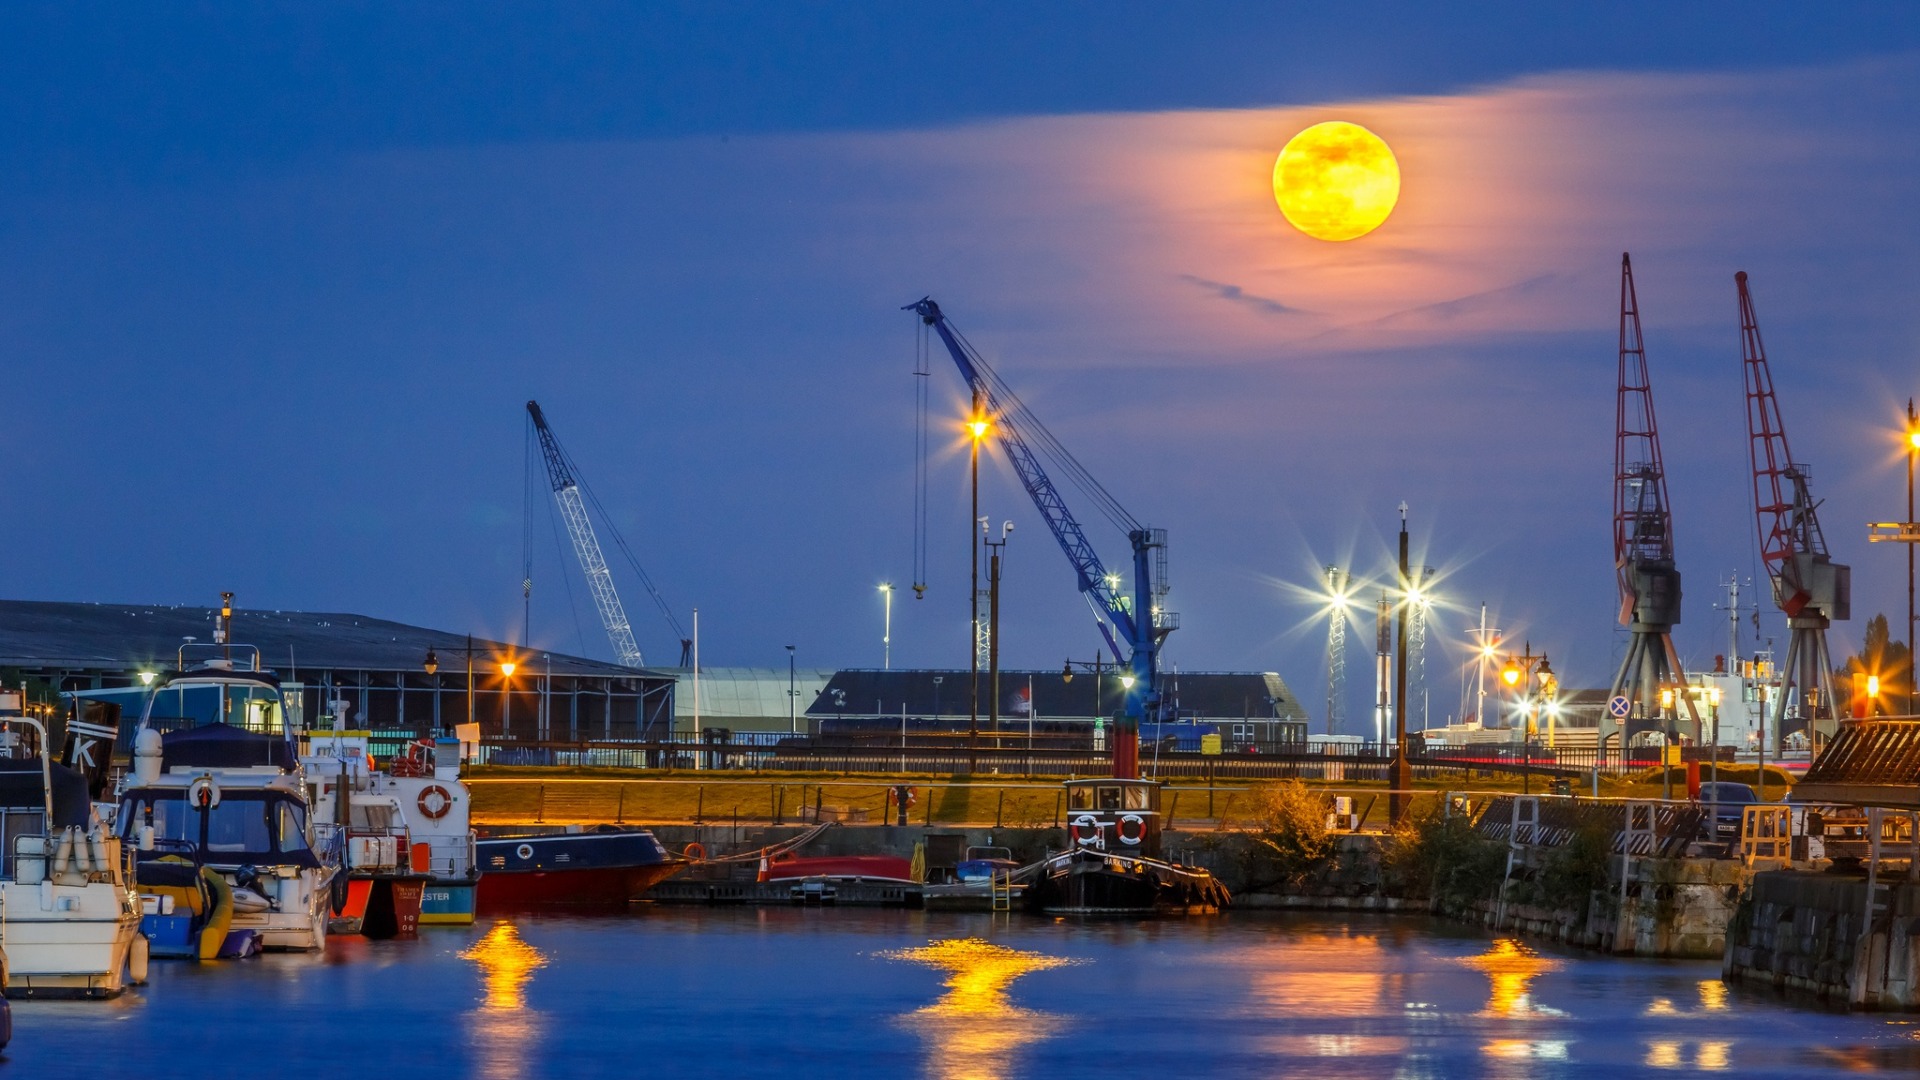 Ship Shipyard Dock Cranes Machine Evening Yachts Moon Sky Water Reflection Lights Building UK 1920x1080